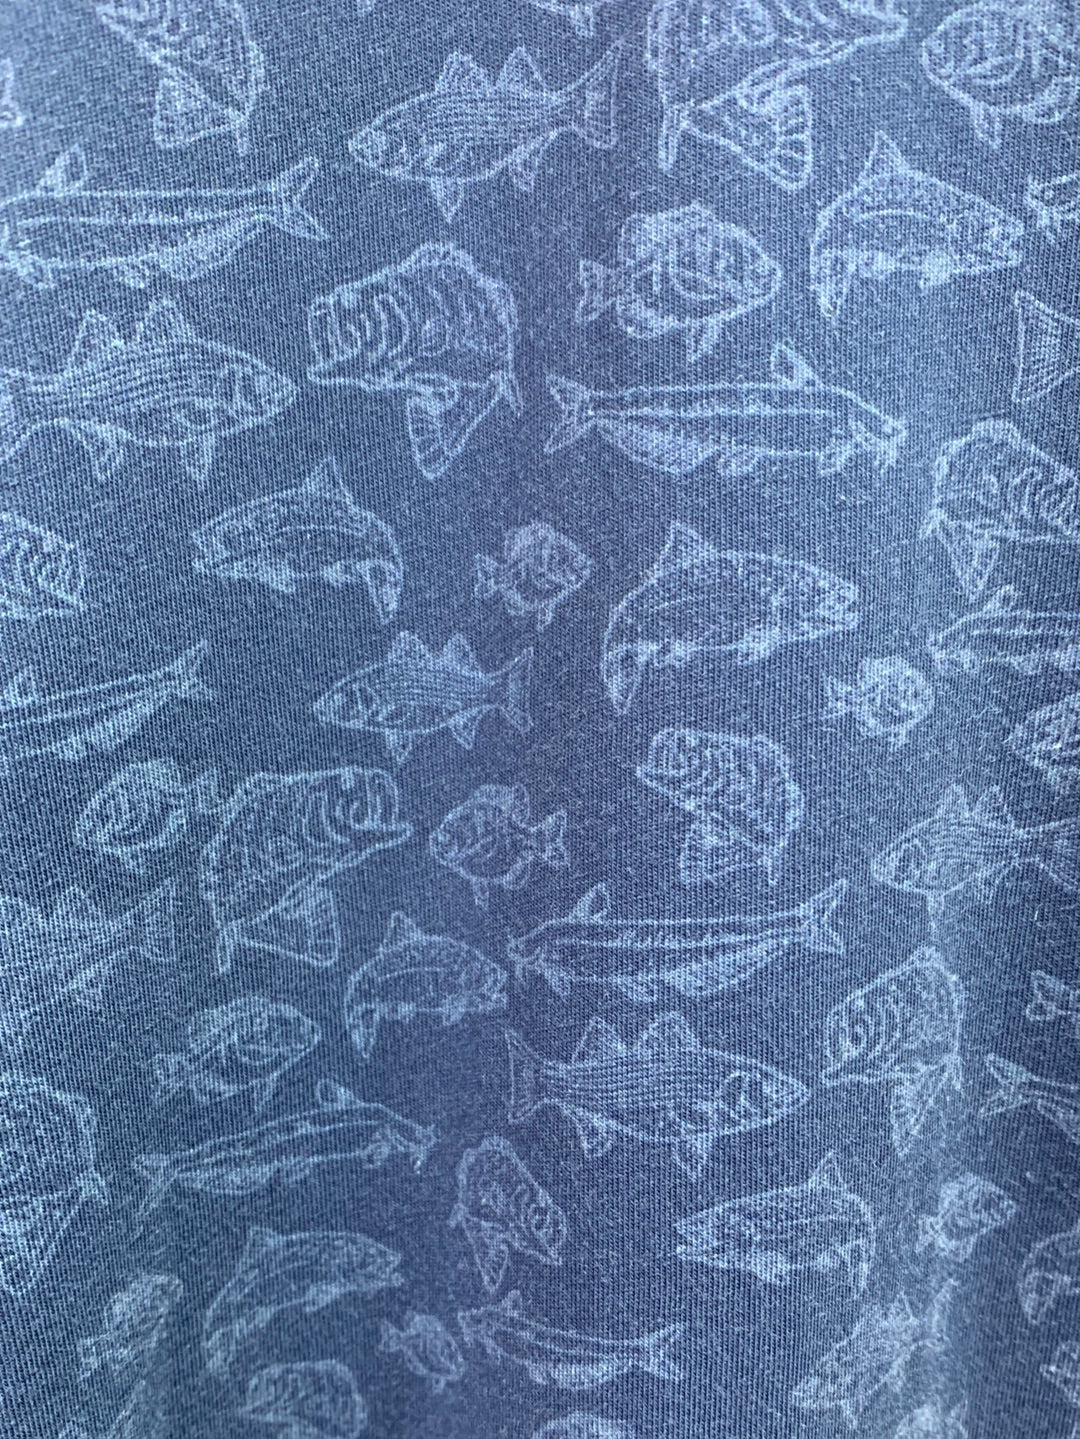 PETER MILLAR blue fish print Pima Cotton Short Sleeve Polo Shirt - XL